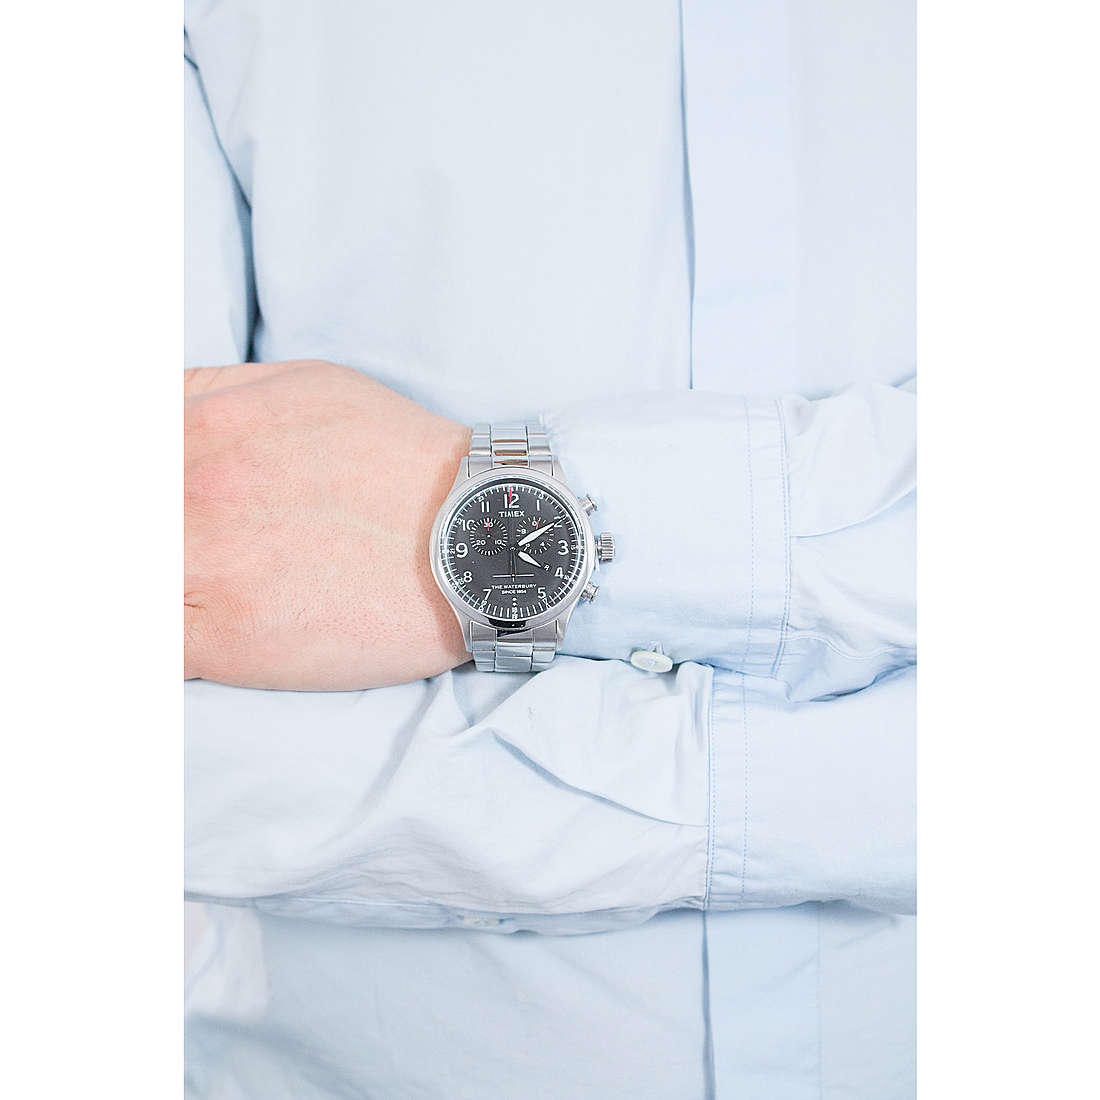 Timex cronografi Waterbury Collection uomo TW2R38400 indosso